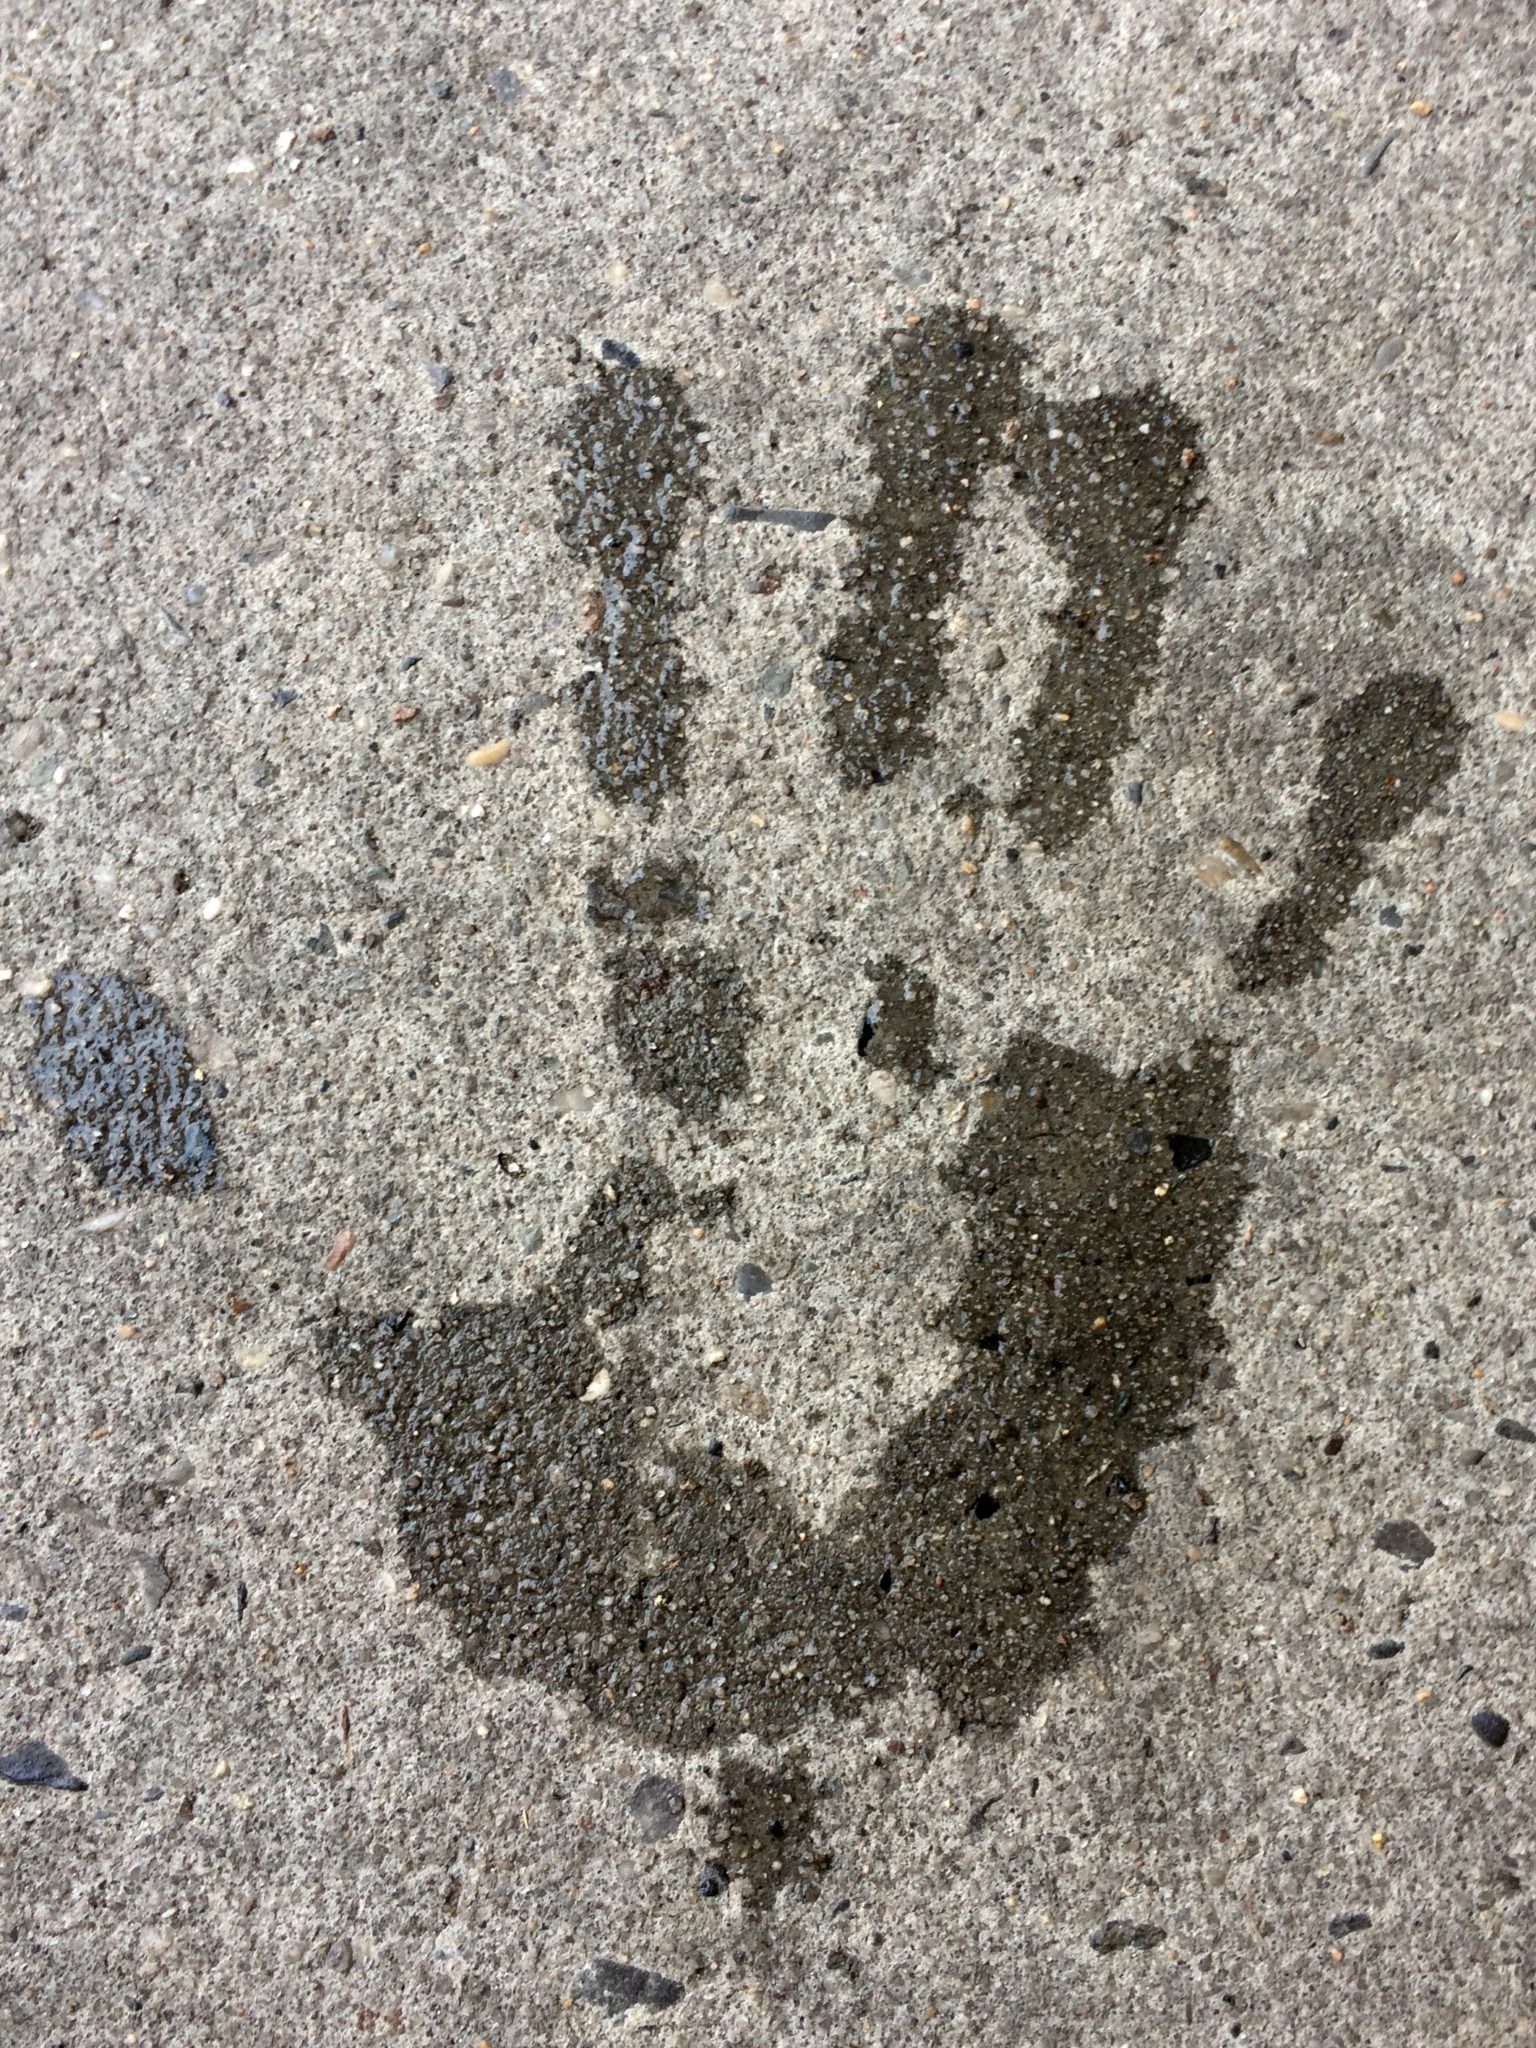 hand print on pavement